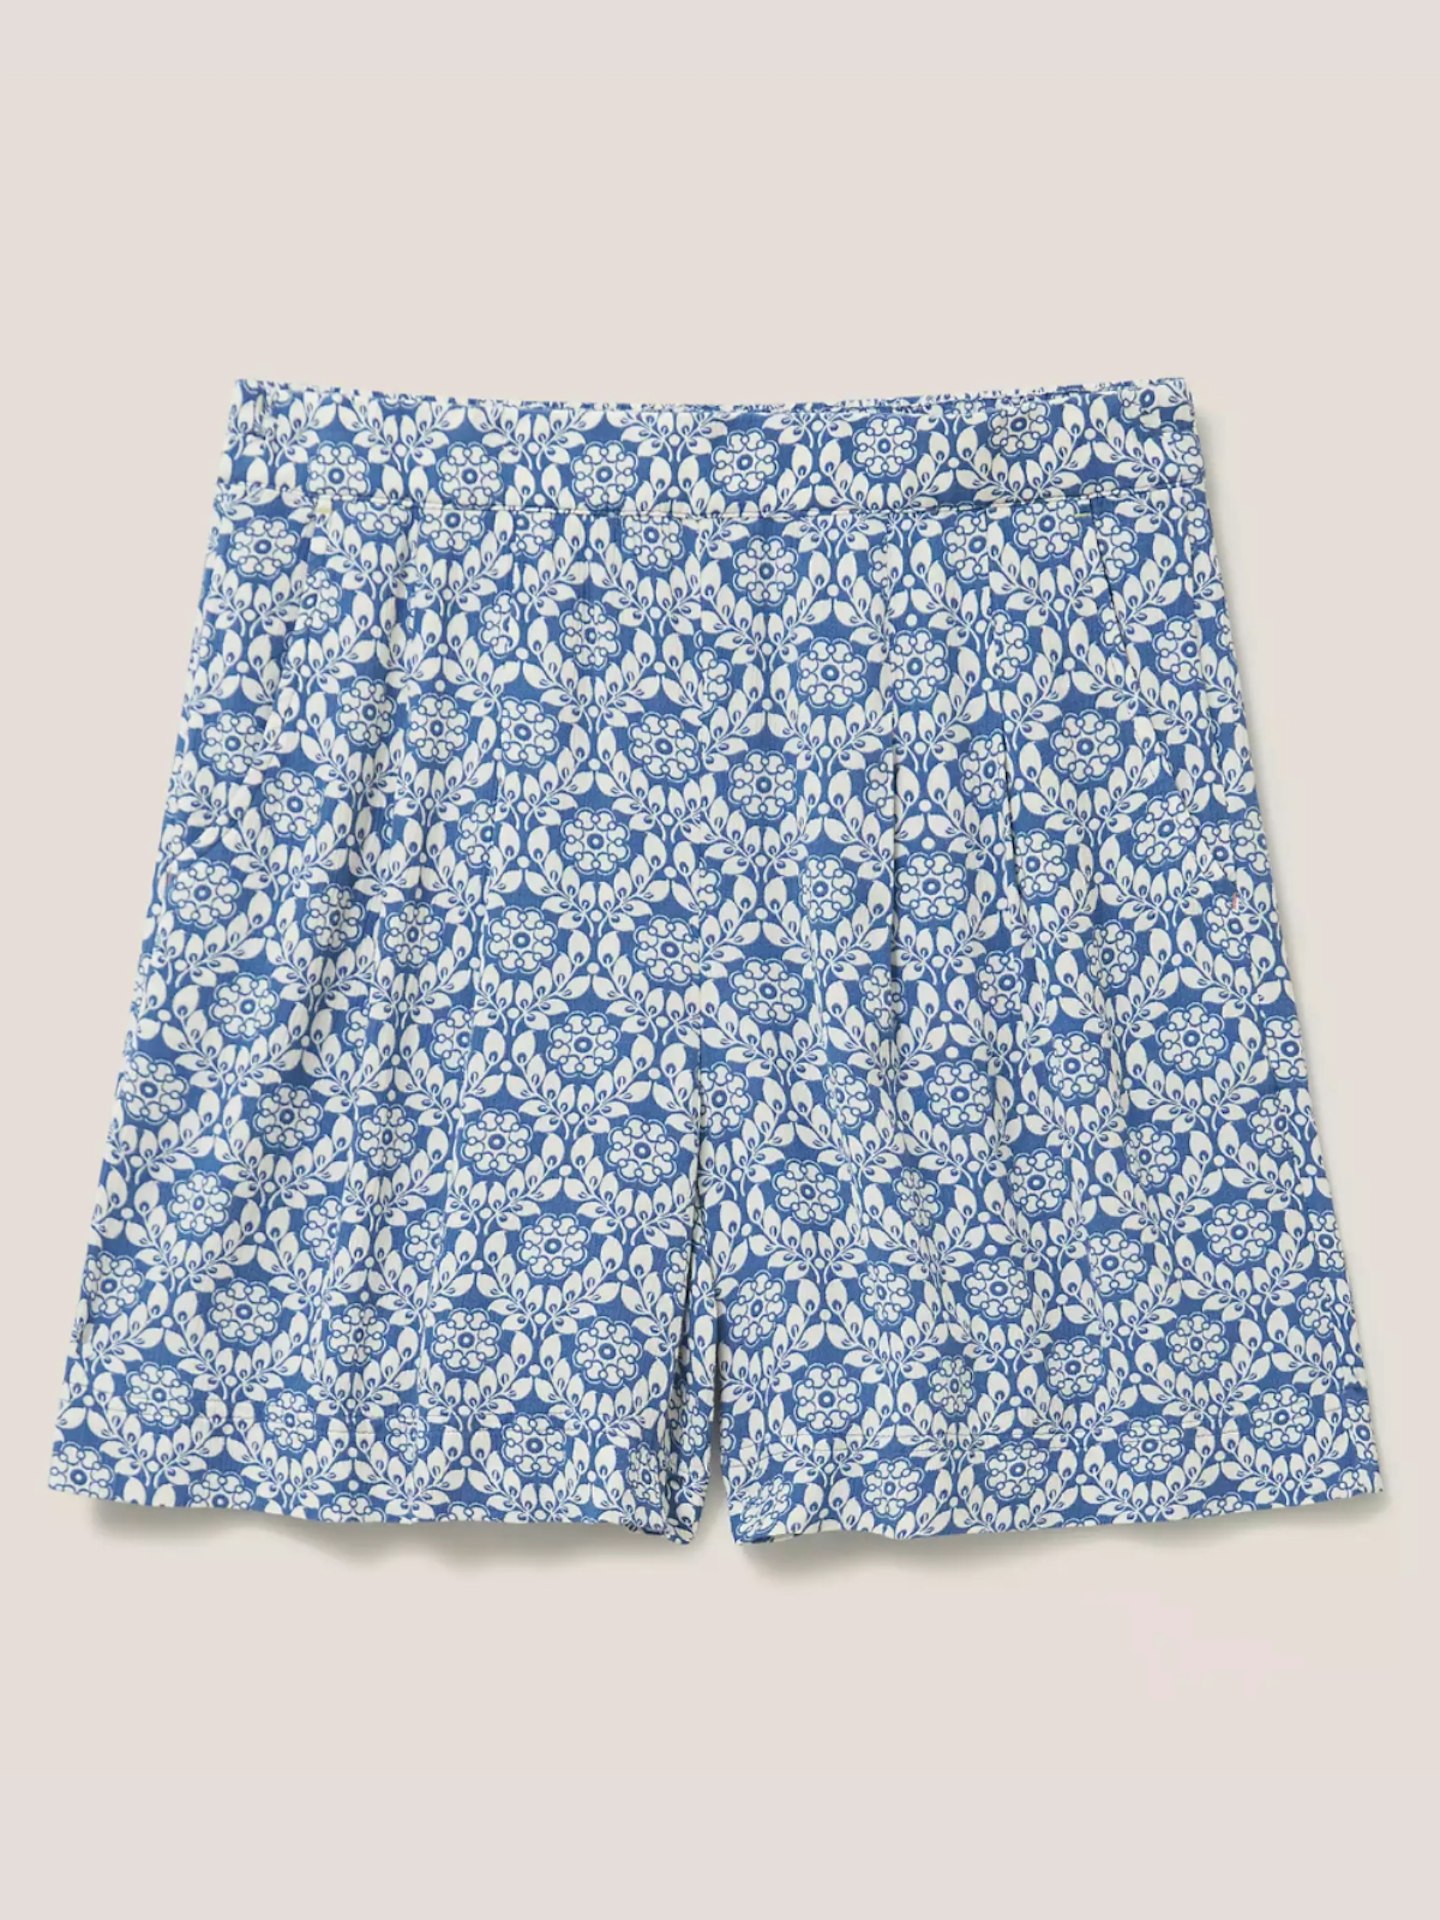 White Stuff, Matilda Crinkle Shorts, Blue/Multi